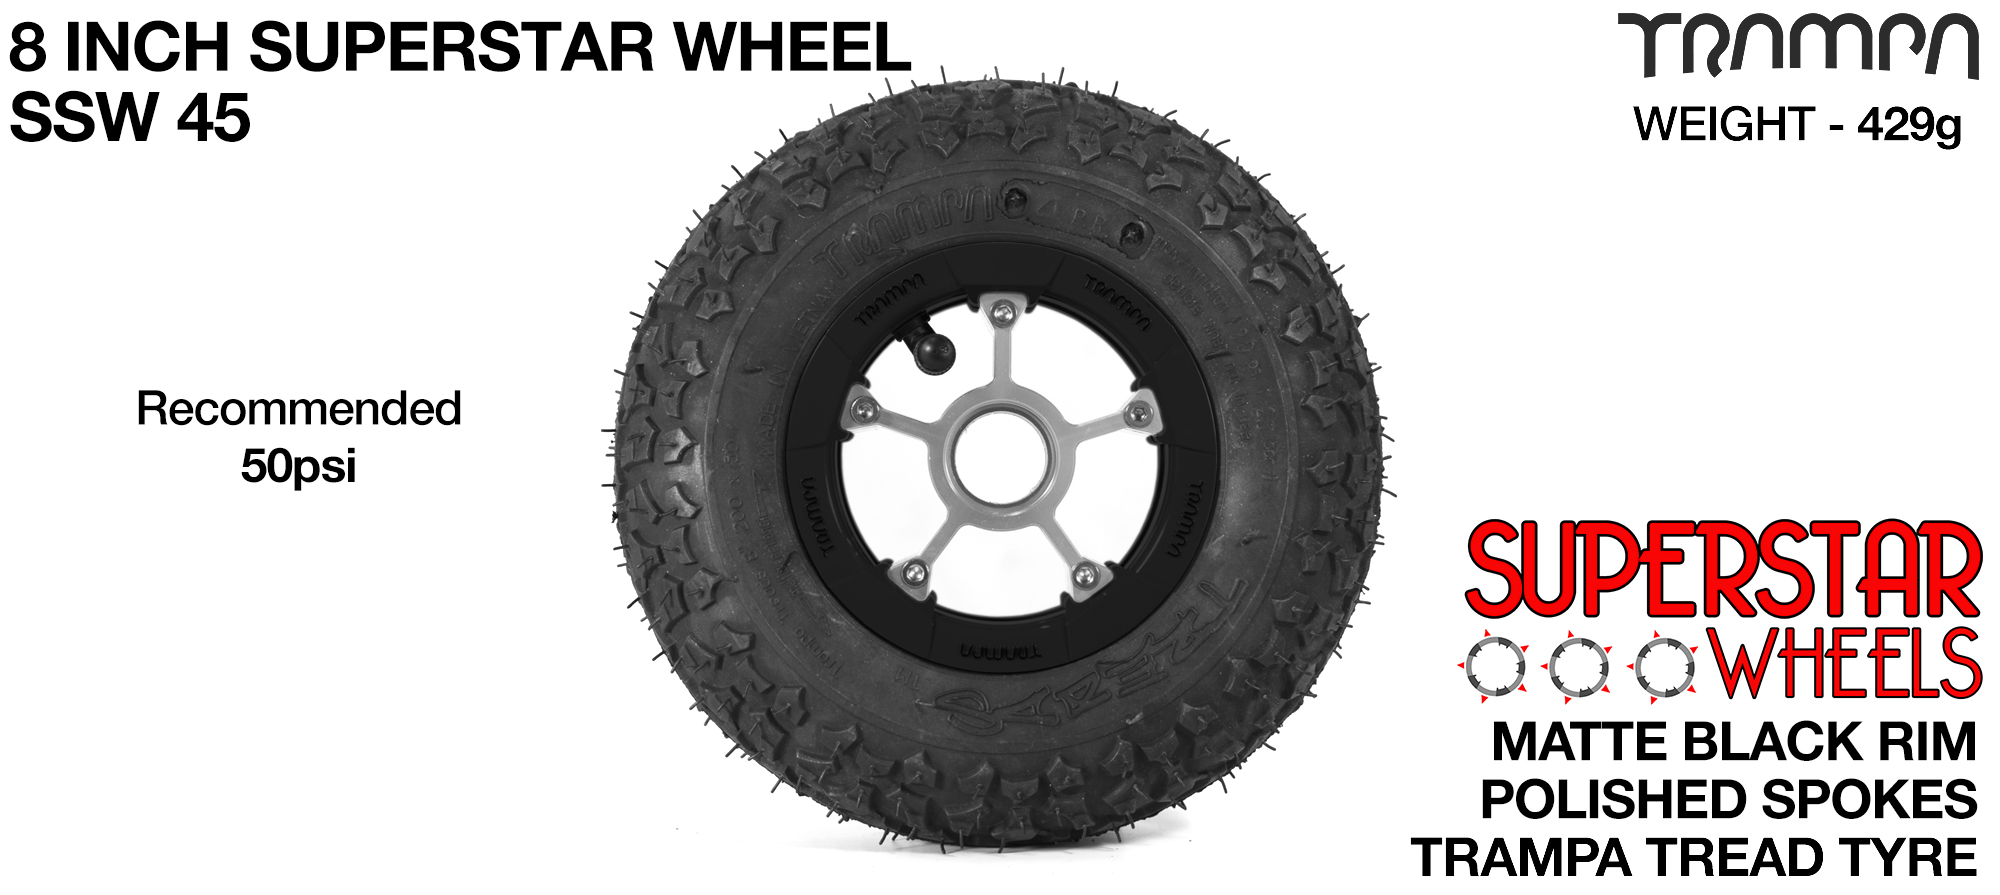 Superstar 8 inch wheel - Matt Black Rim with Silver Anodised spokes & TRAMPA TREAD 8 Inch Tyres